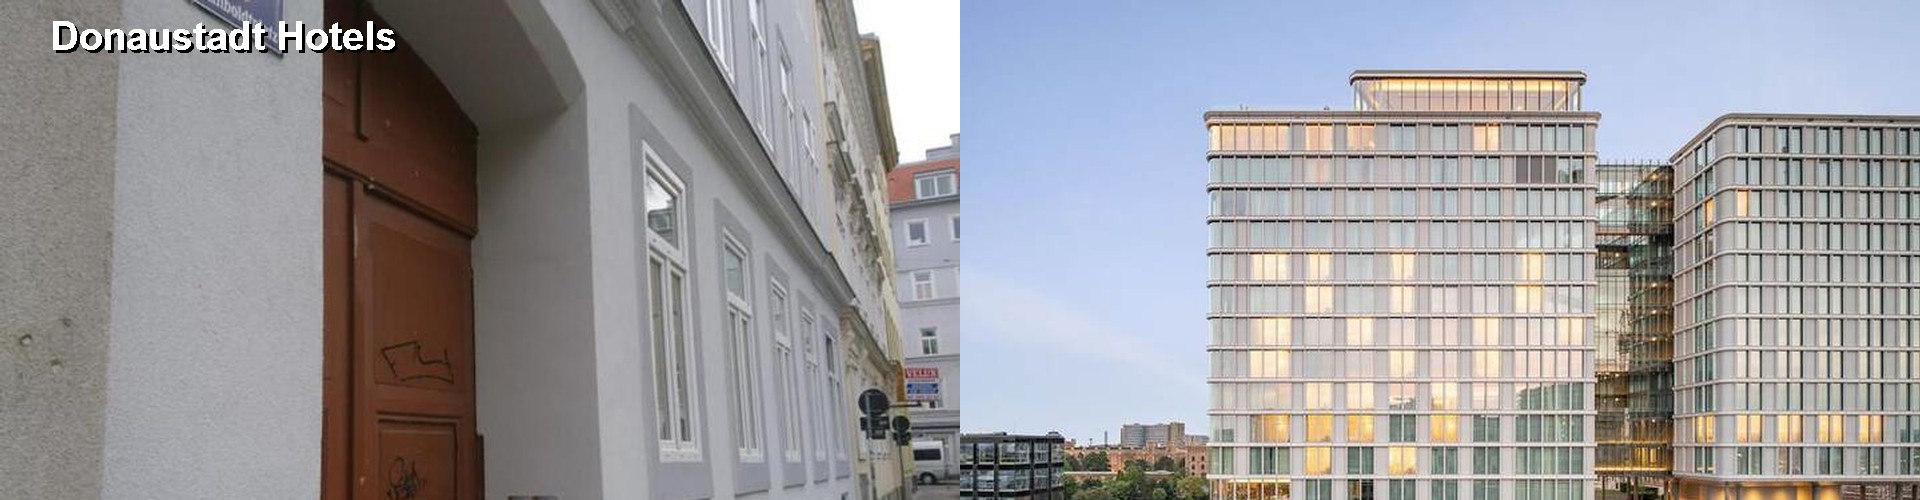 5 Best Hotels near Donaustadt